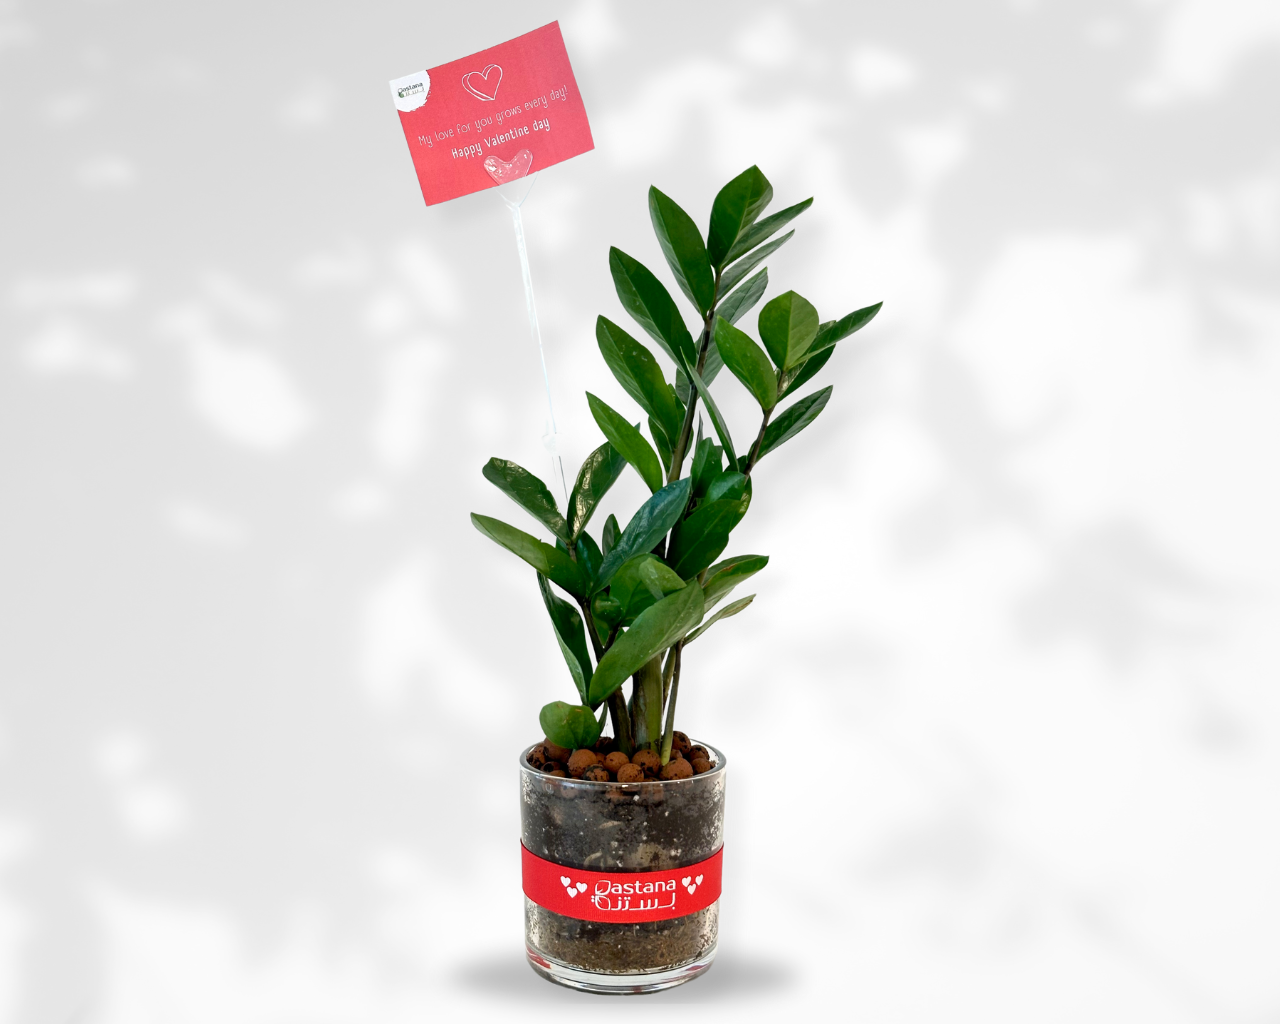 Zamia plant gift in a glass pot